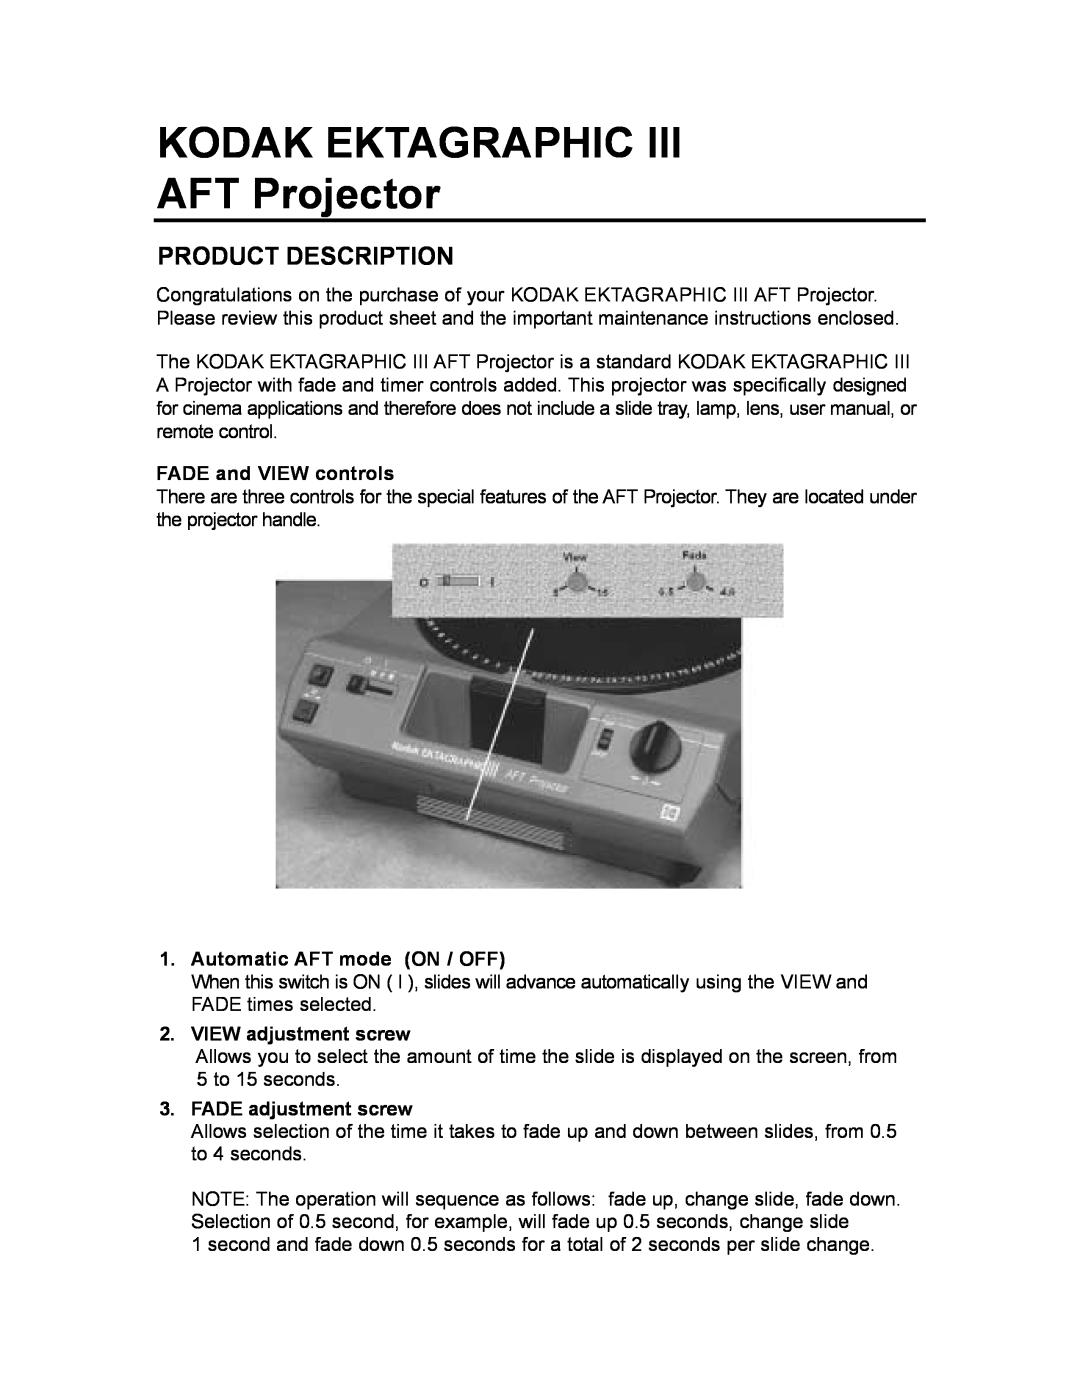 Sharp Model AFT KODAK EKTAGRAPHIC AFT Projector, Product Description, FADE and VIEW controls, Automatic AFT mode ON / OFF 